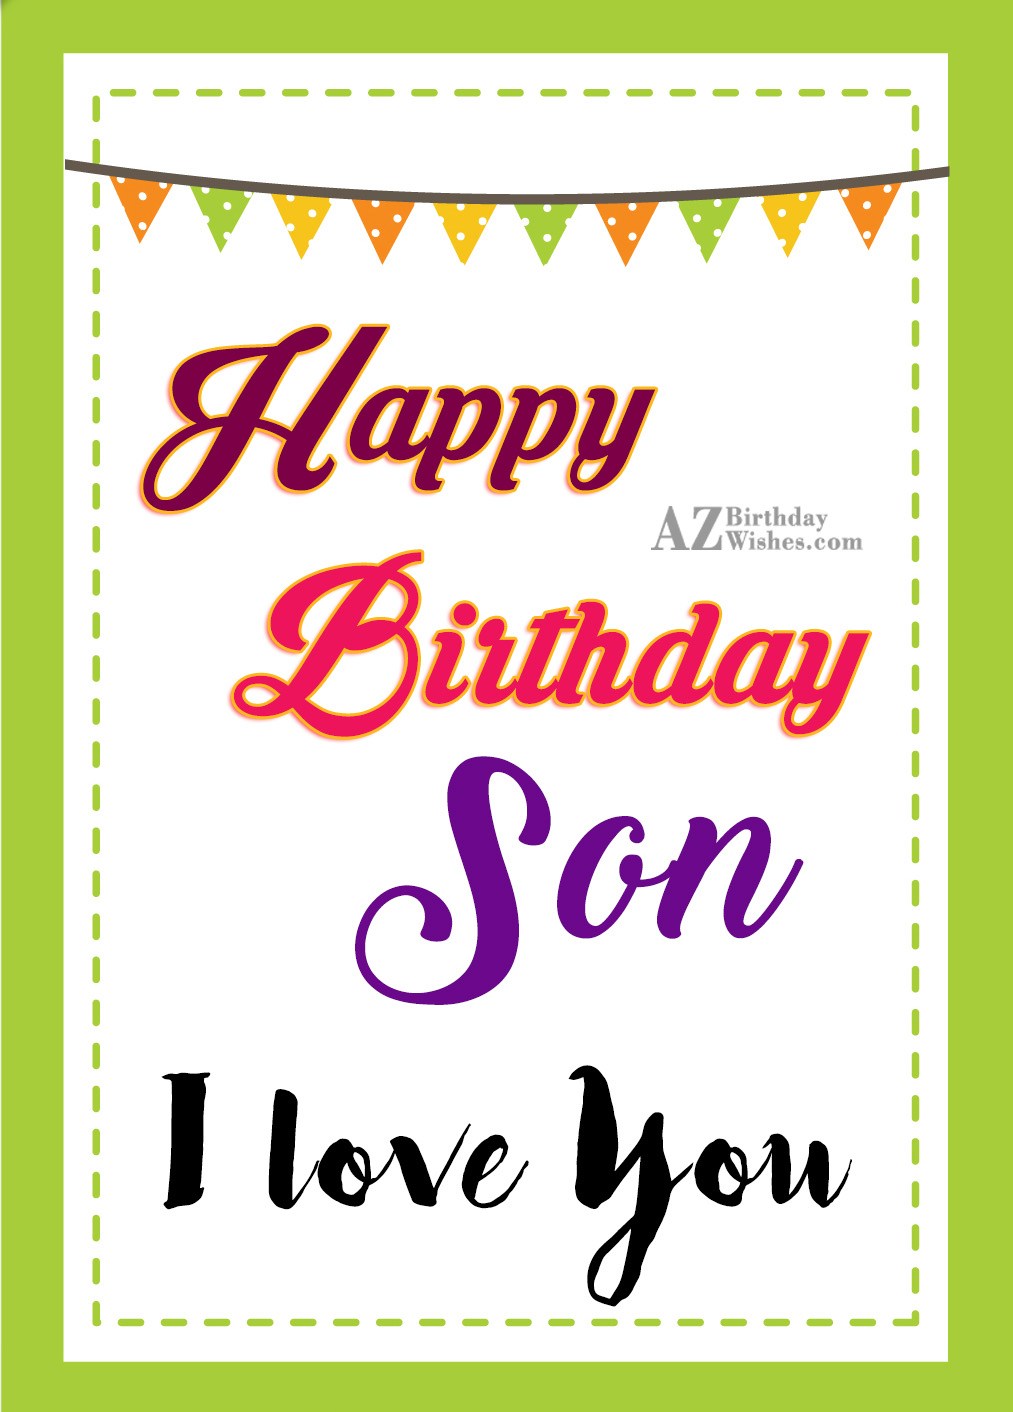 Happy birthday my son i love you